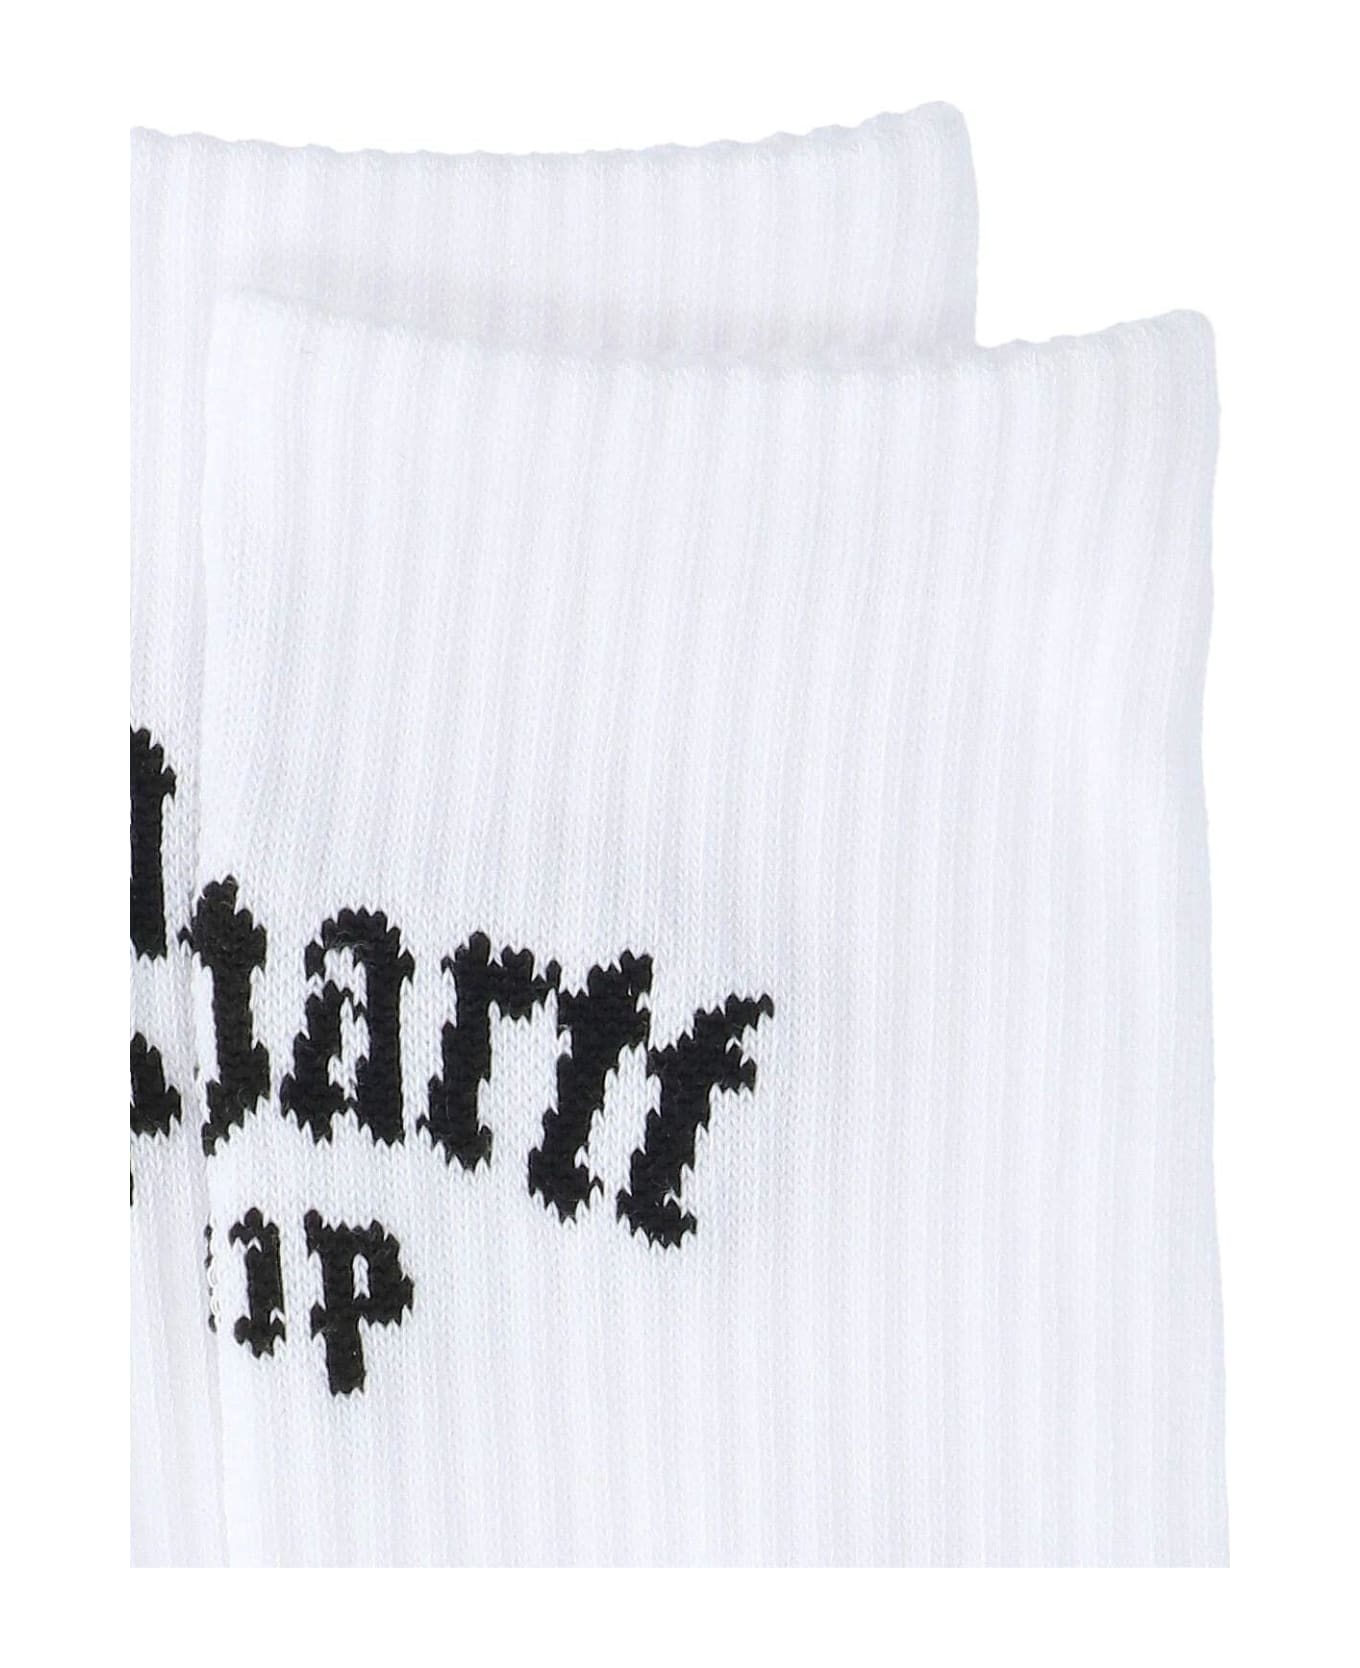 Carhartt 'onyx' Socks - Bianco/nero 靴下